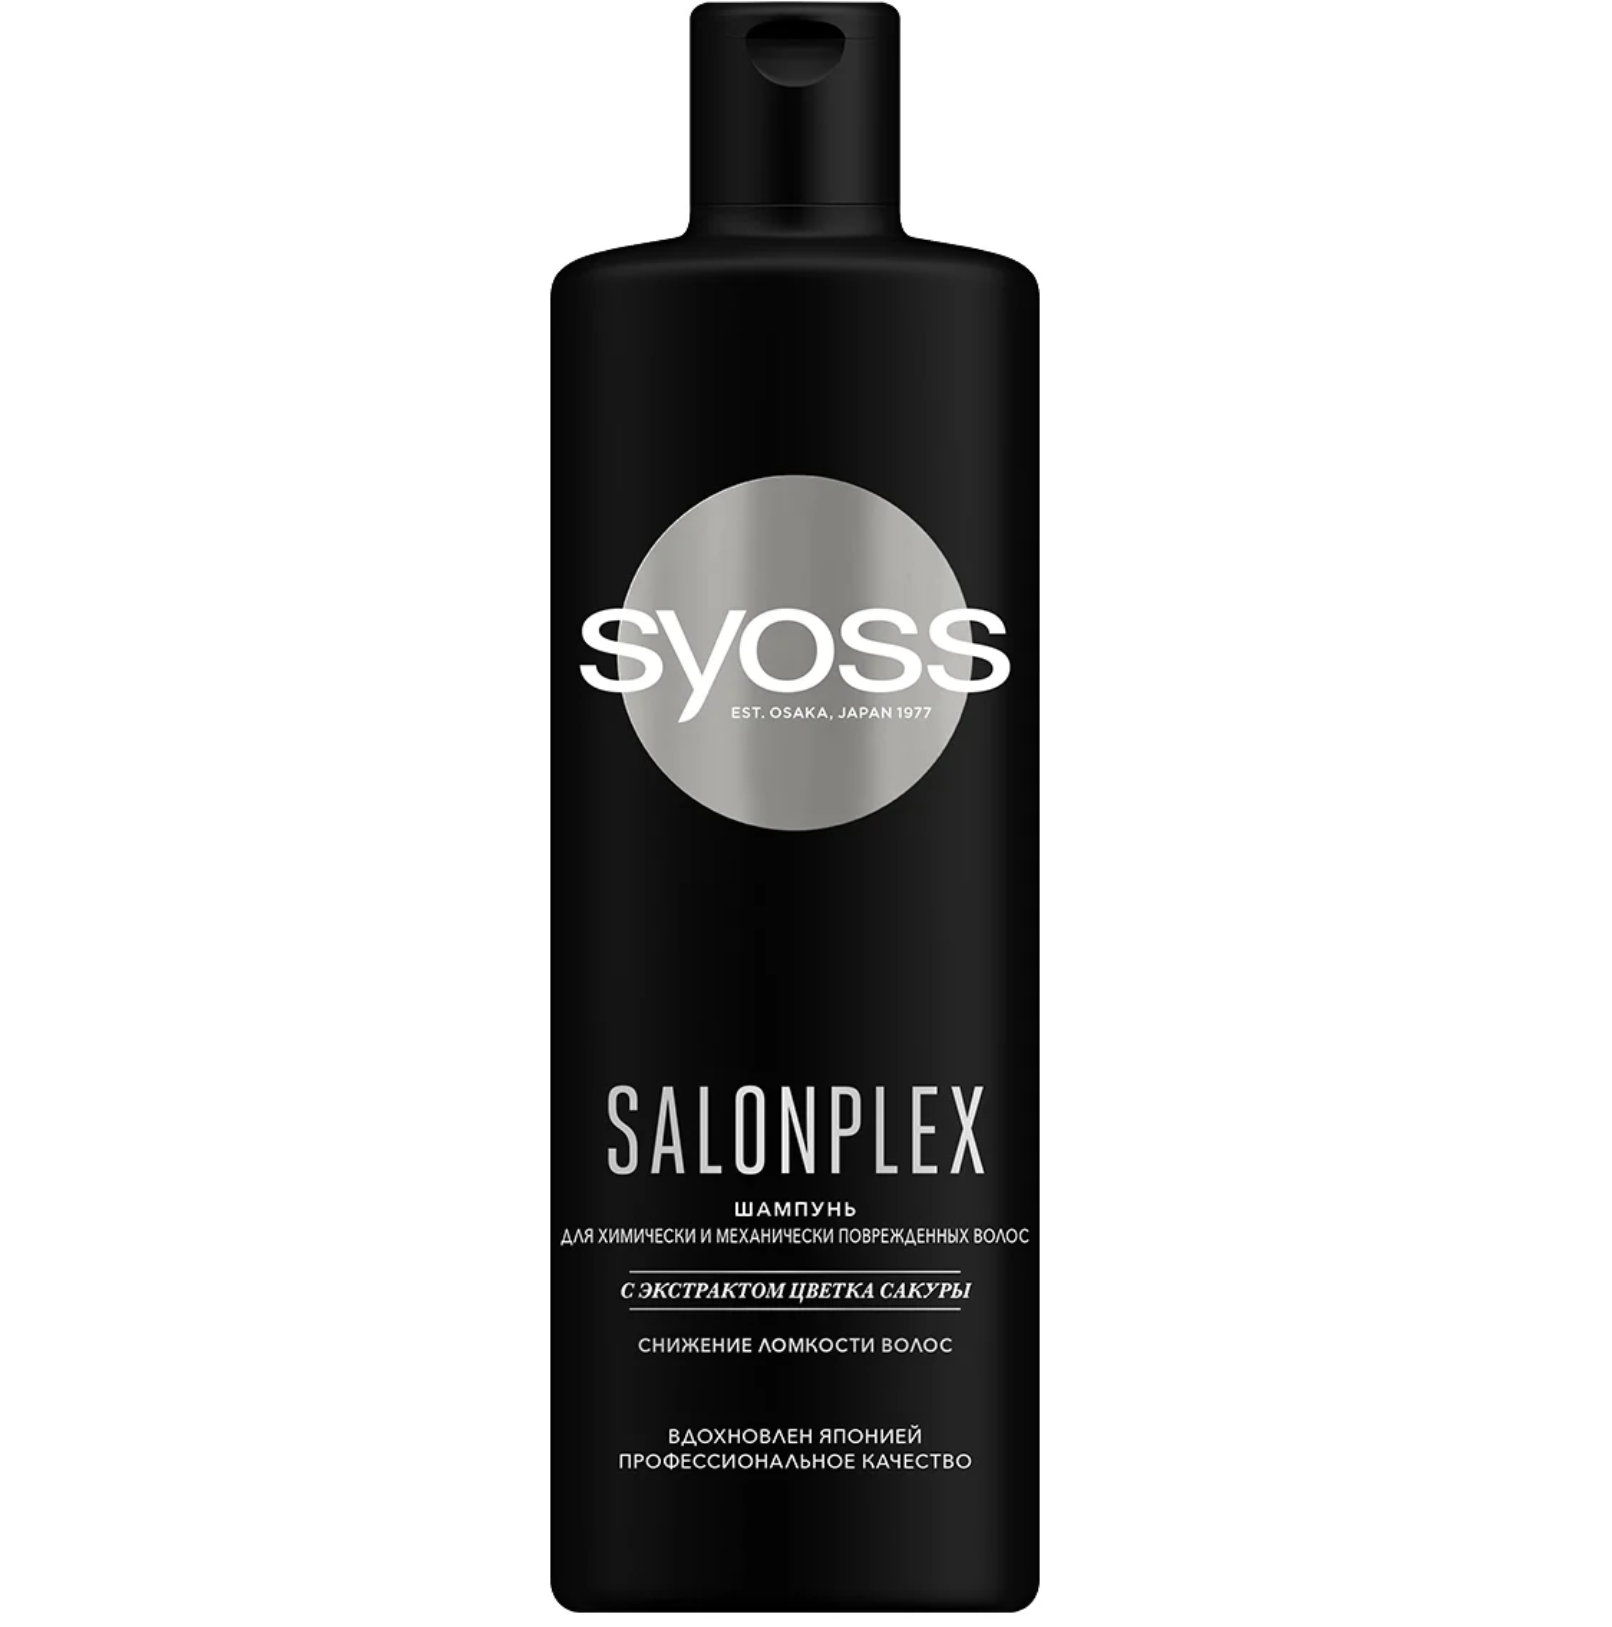   / Syoss Salonplex -         450 